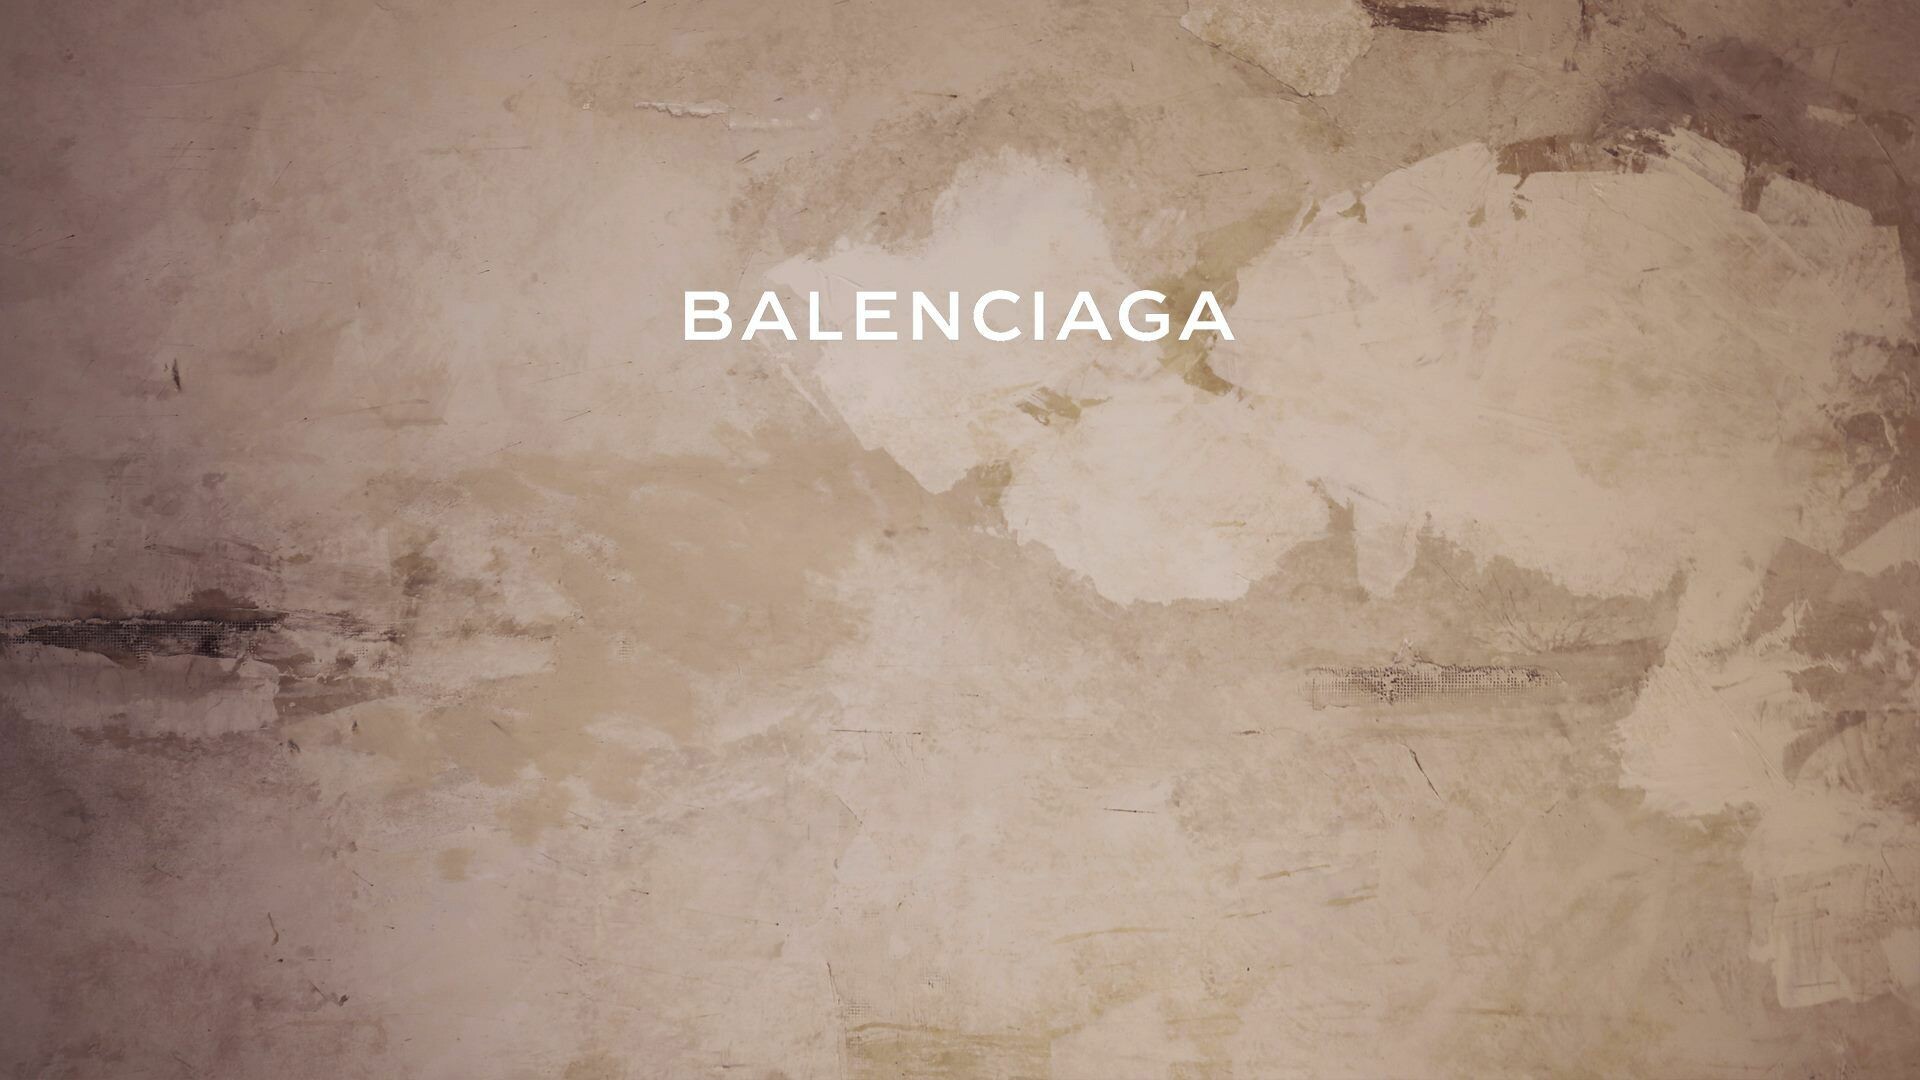 Balenciaga: Cristobal Balenciaga, Revolutionized the concept of dressing and the female silhouette. 1920x1080 Full HD Wallpaper.